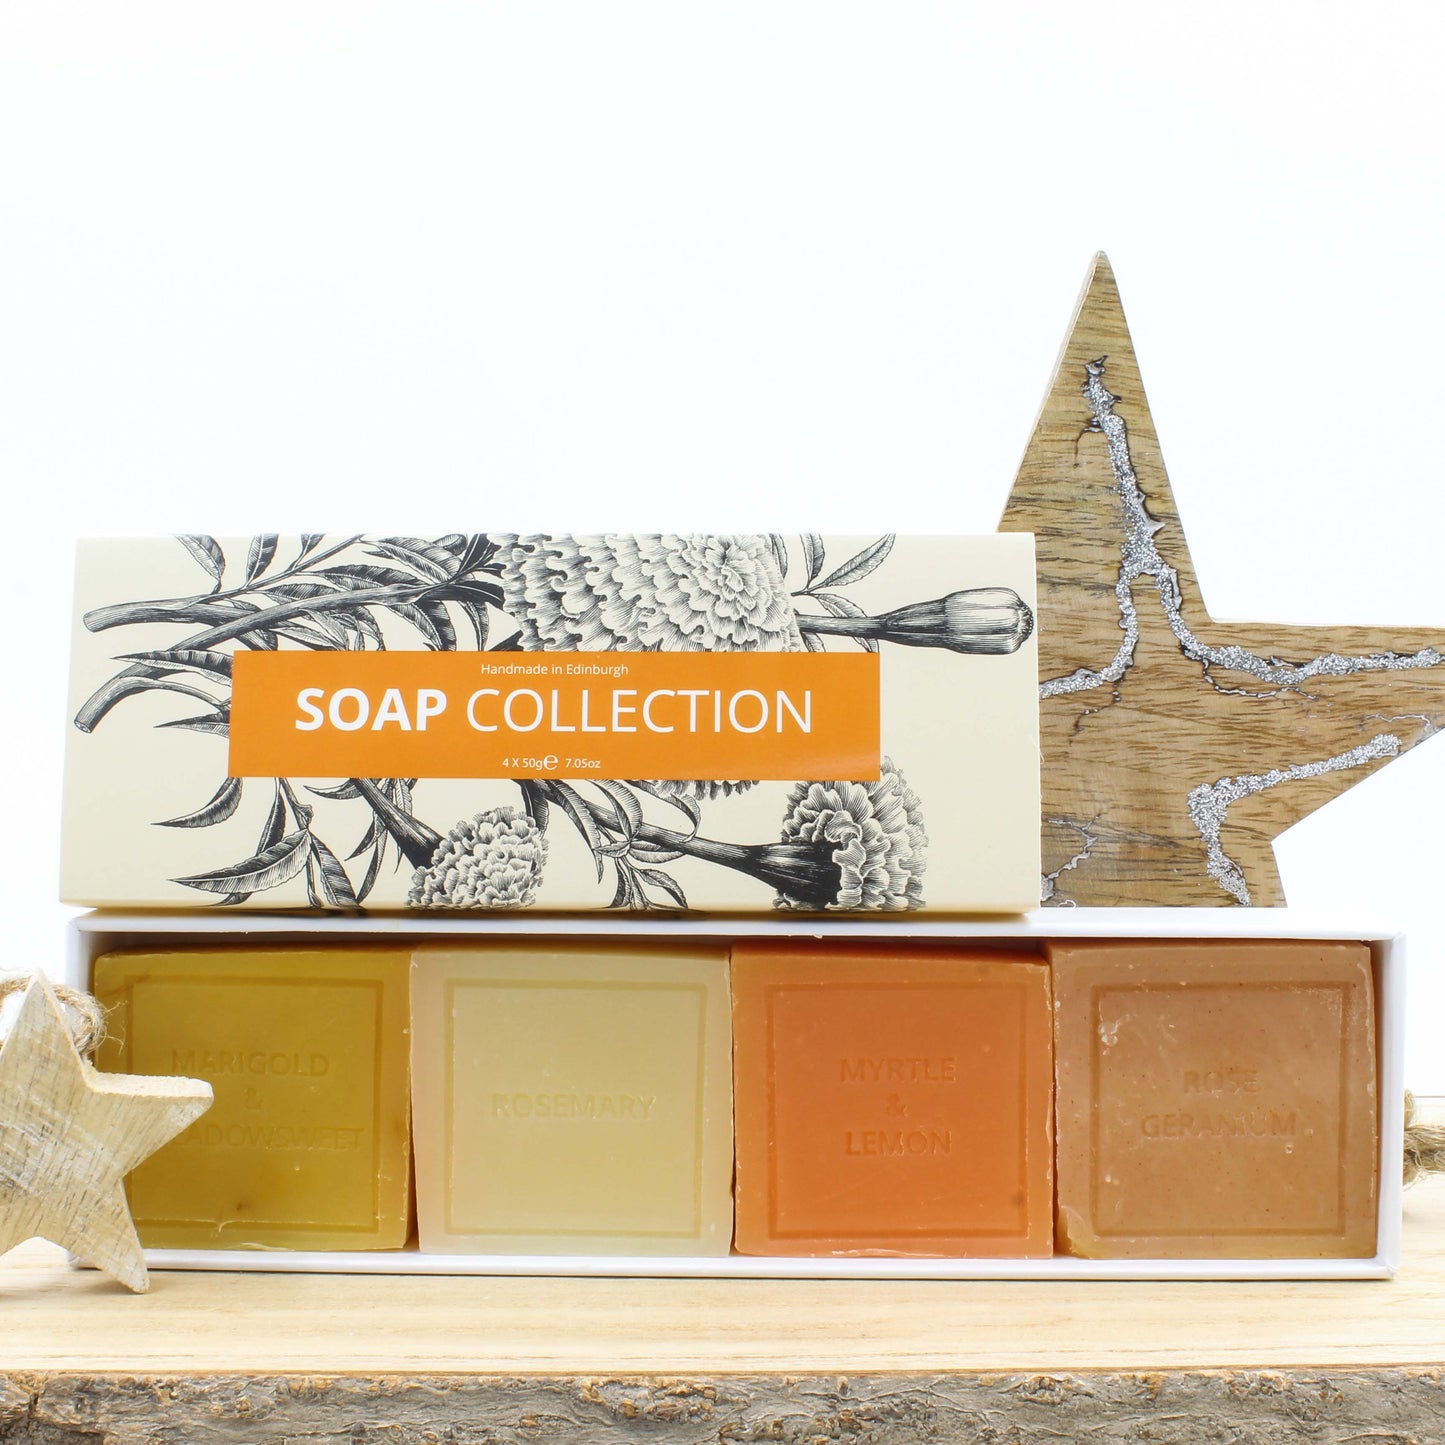 Scottish Botanicals - Soap Collection Gift Set